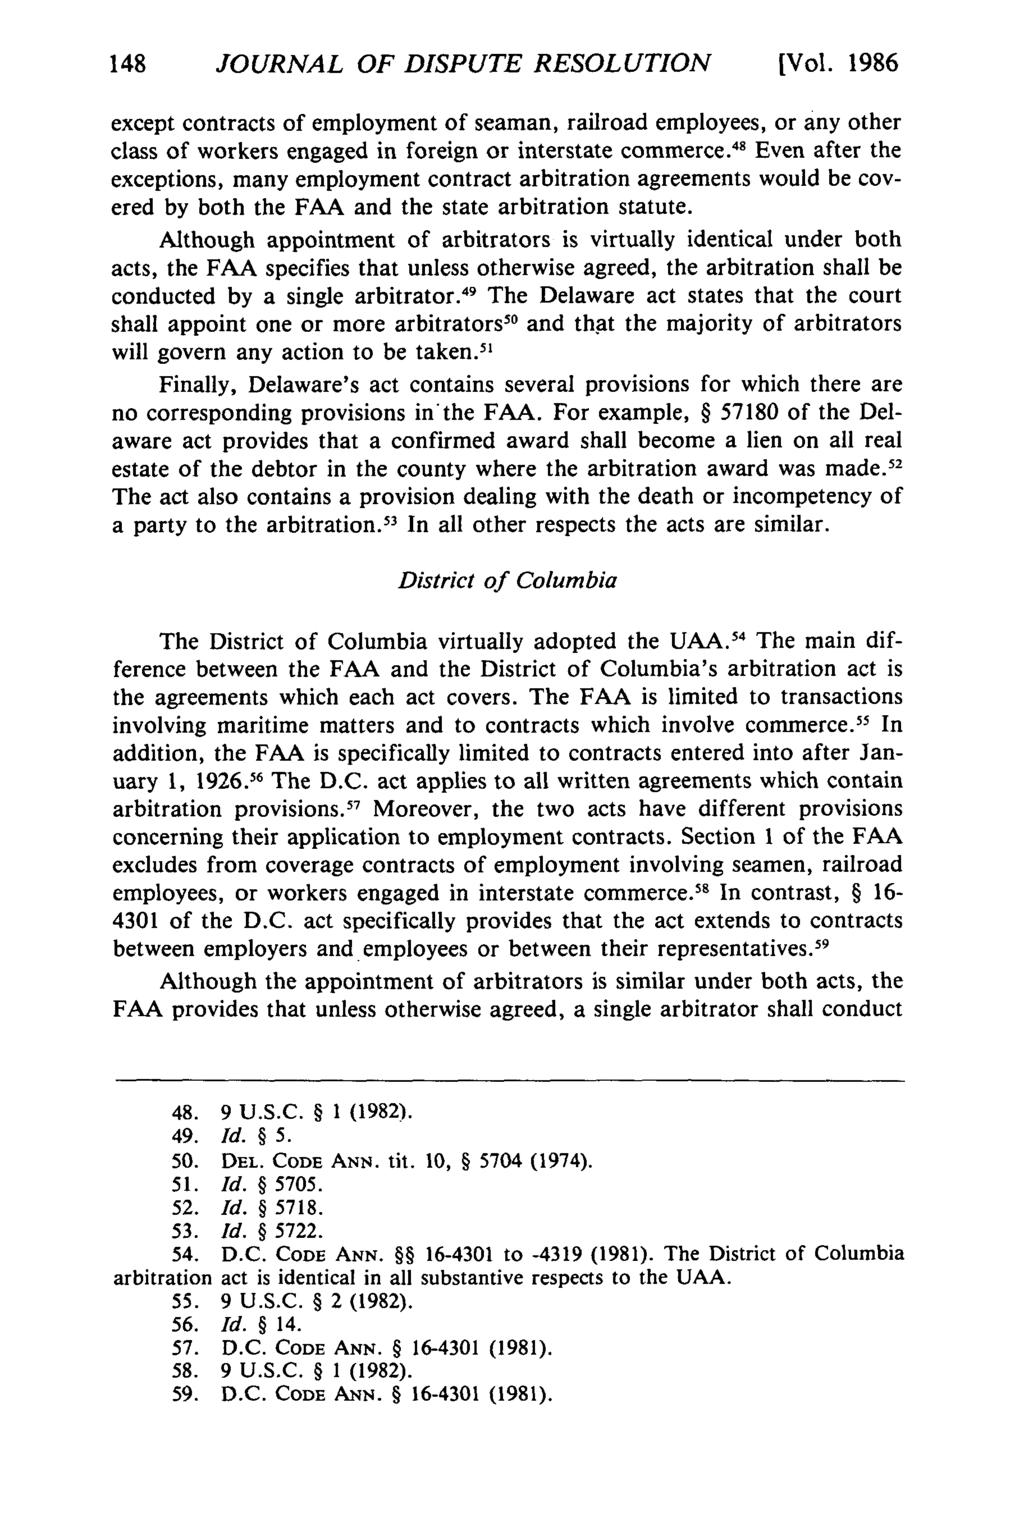 JOURNAL Journal of Dispute OF DISPUTE Resolution, Vol. RESOLUTION 1986, Iss. [1986], Art. 12 [Vol.